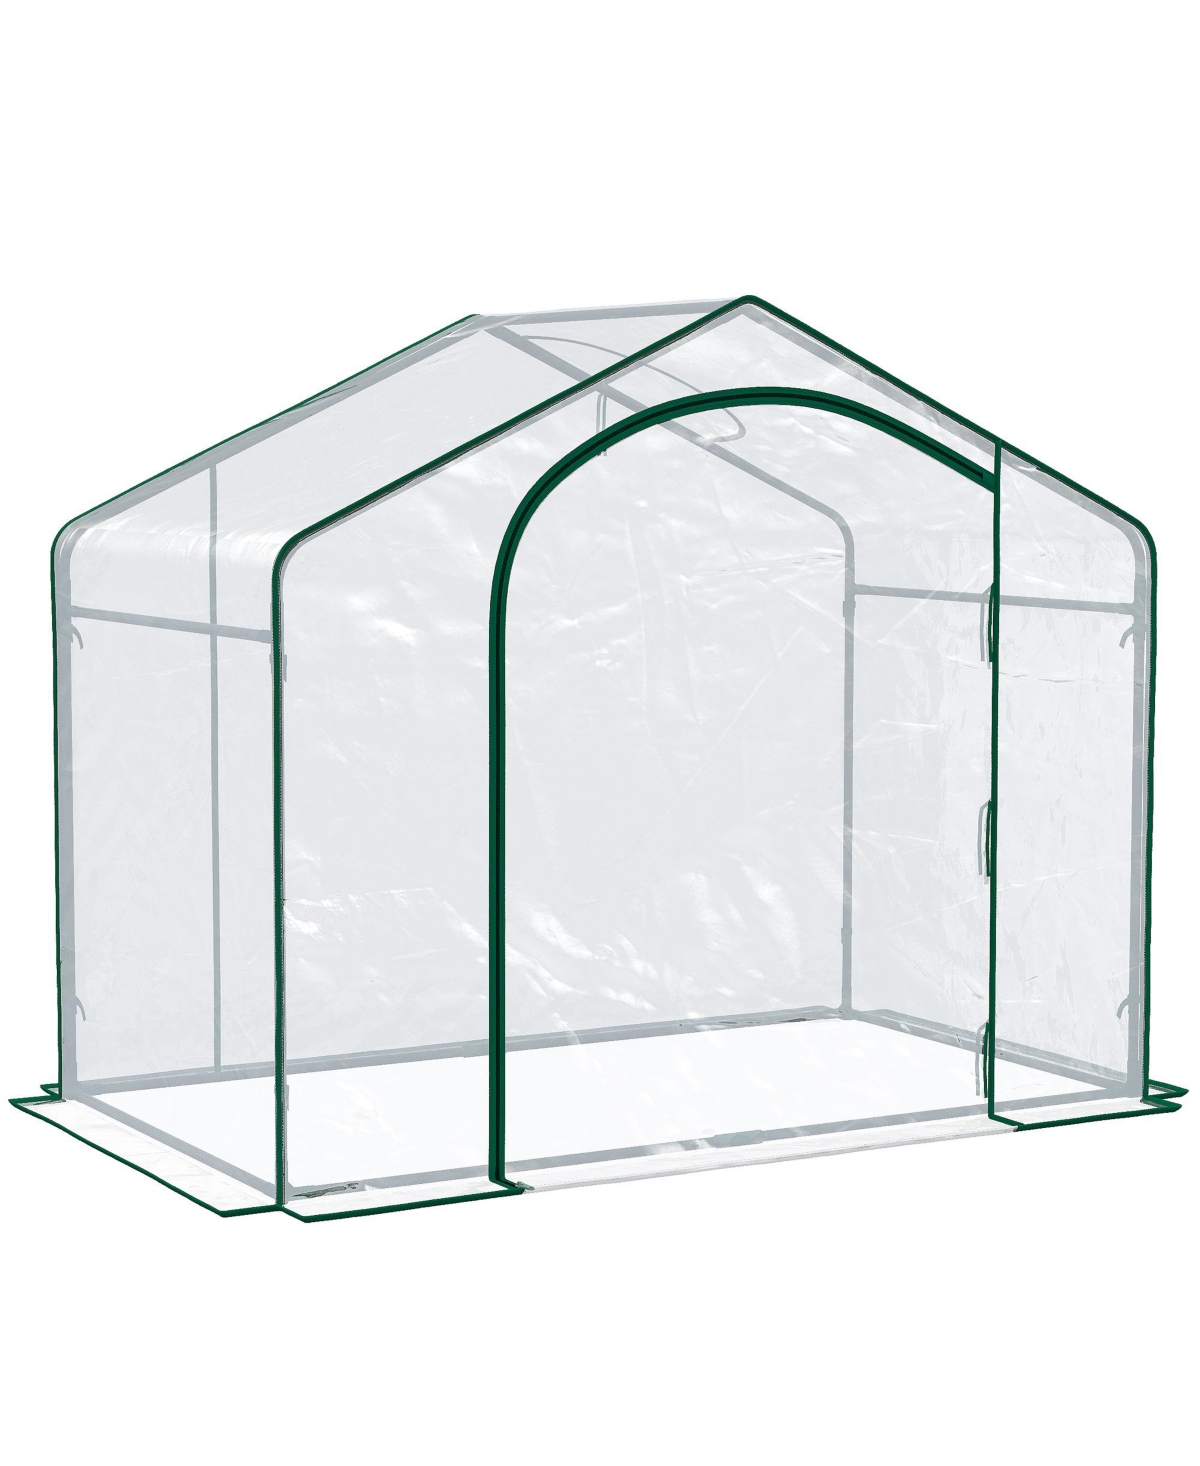 6' x 3' x 6' Portable Walk-in Greenhouse, Pvc Cover, Steel Frame Garden Hot House, Zipper Door, Top Vent for Flowers, Vegetables, Saplings, T